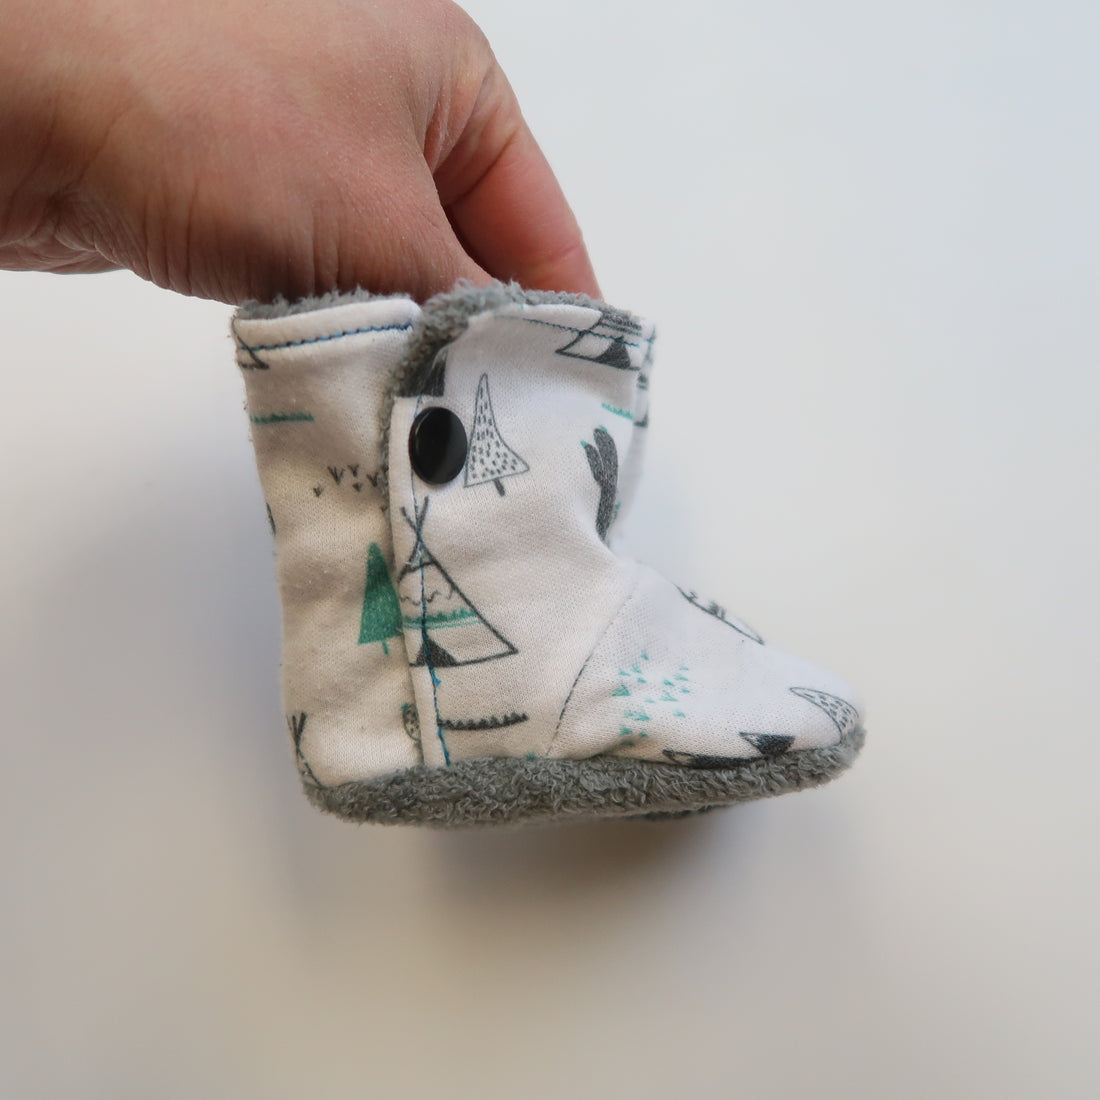 Handmade - Booties (Shoes - 0-6M)